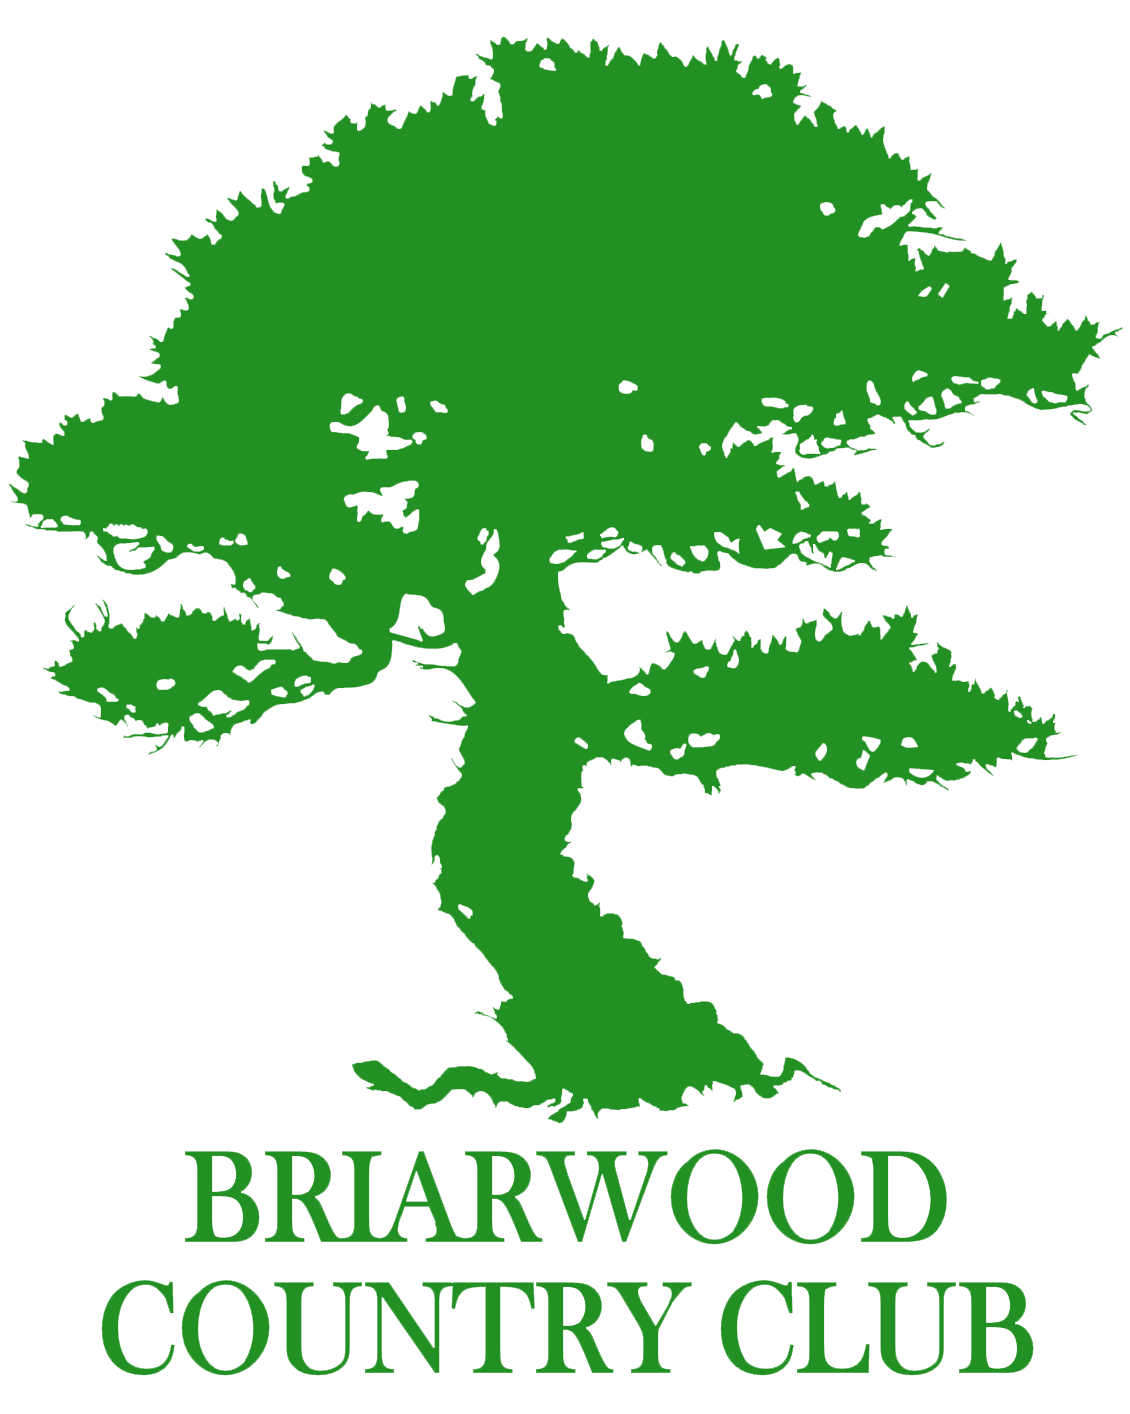 Briarwood Country Club Green